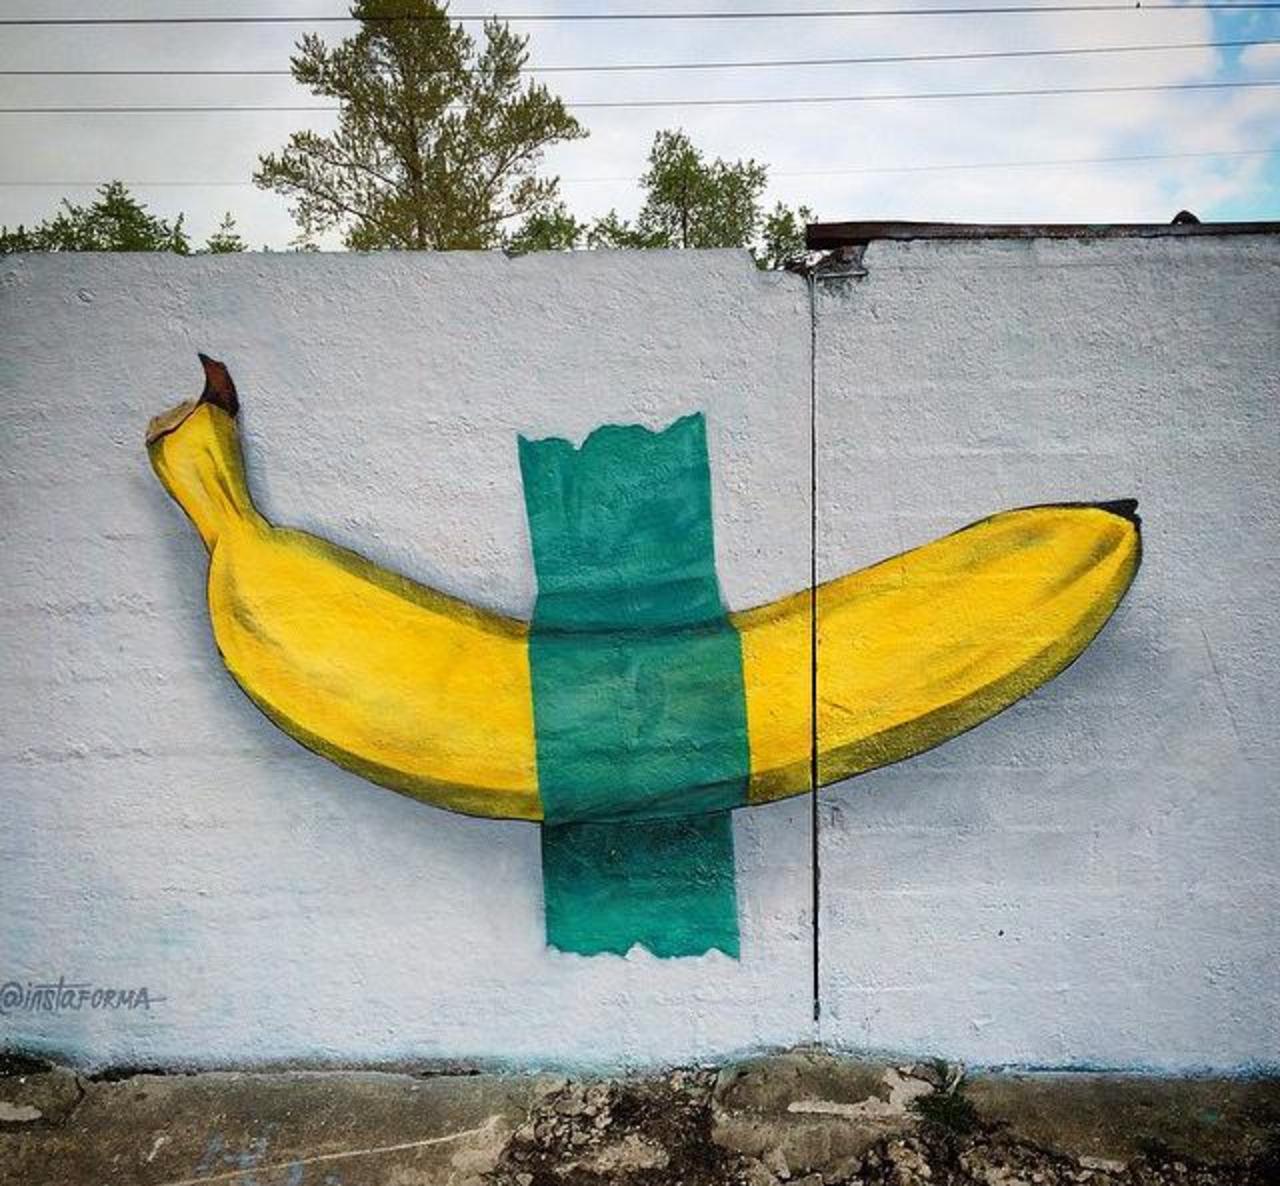 New Street Art by Ches 

#art #arte #graffiti #streetart http://t.co/JhnF175vk8 googlestreetart chinatoniq